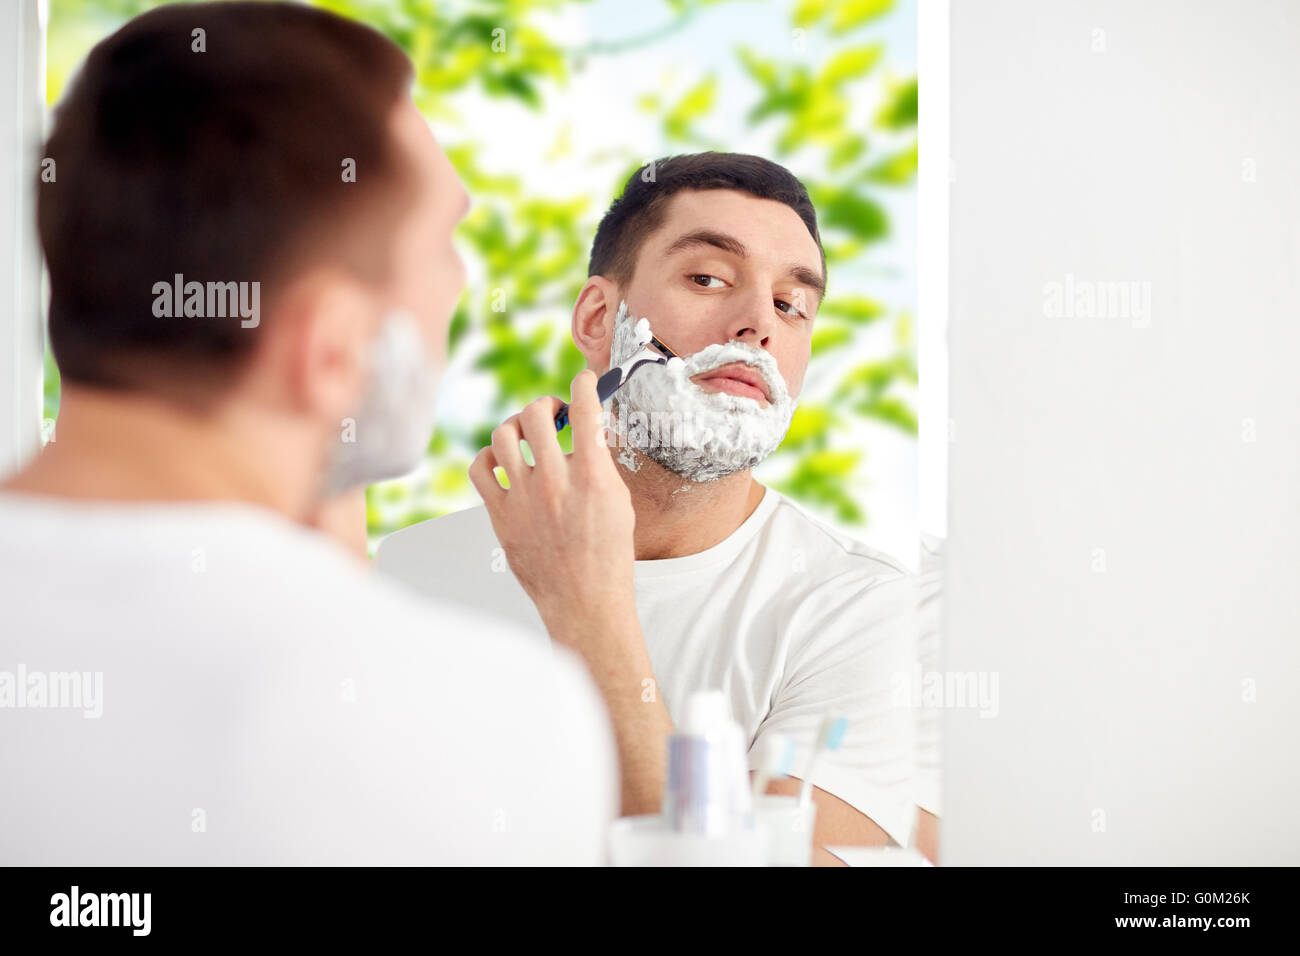 man shaving beard with razor blade at bathroom Stock Photo